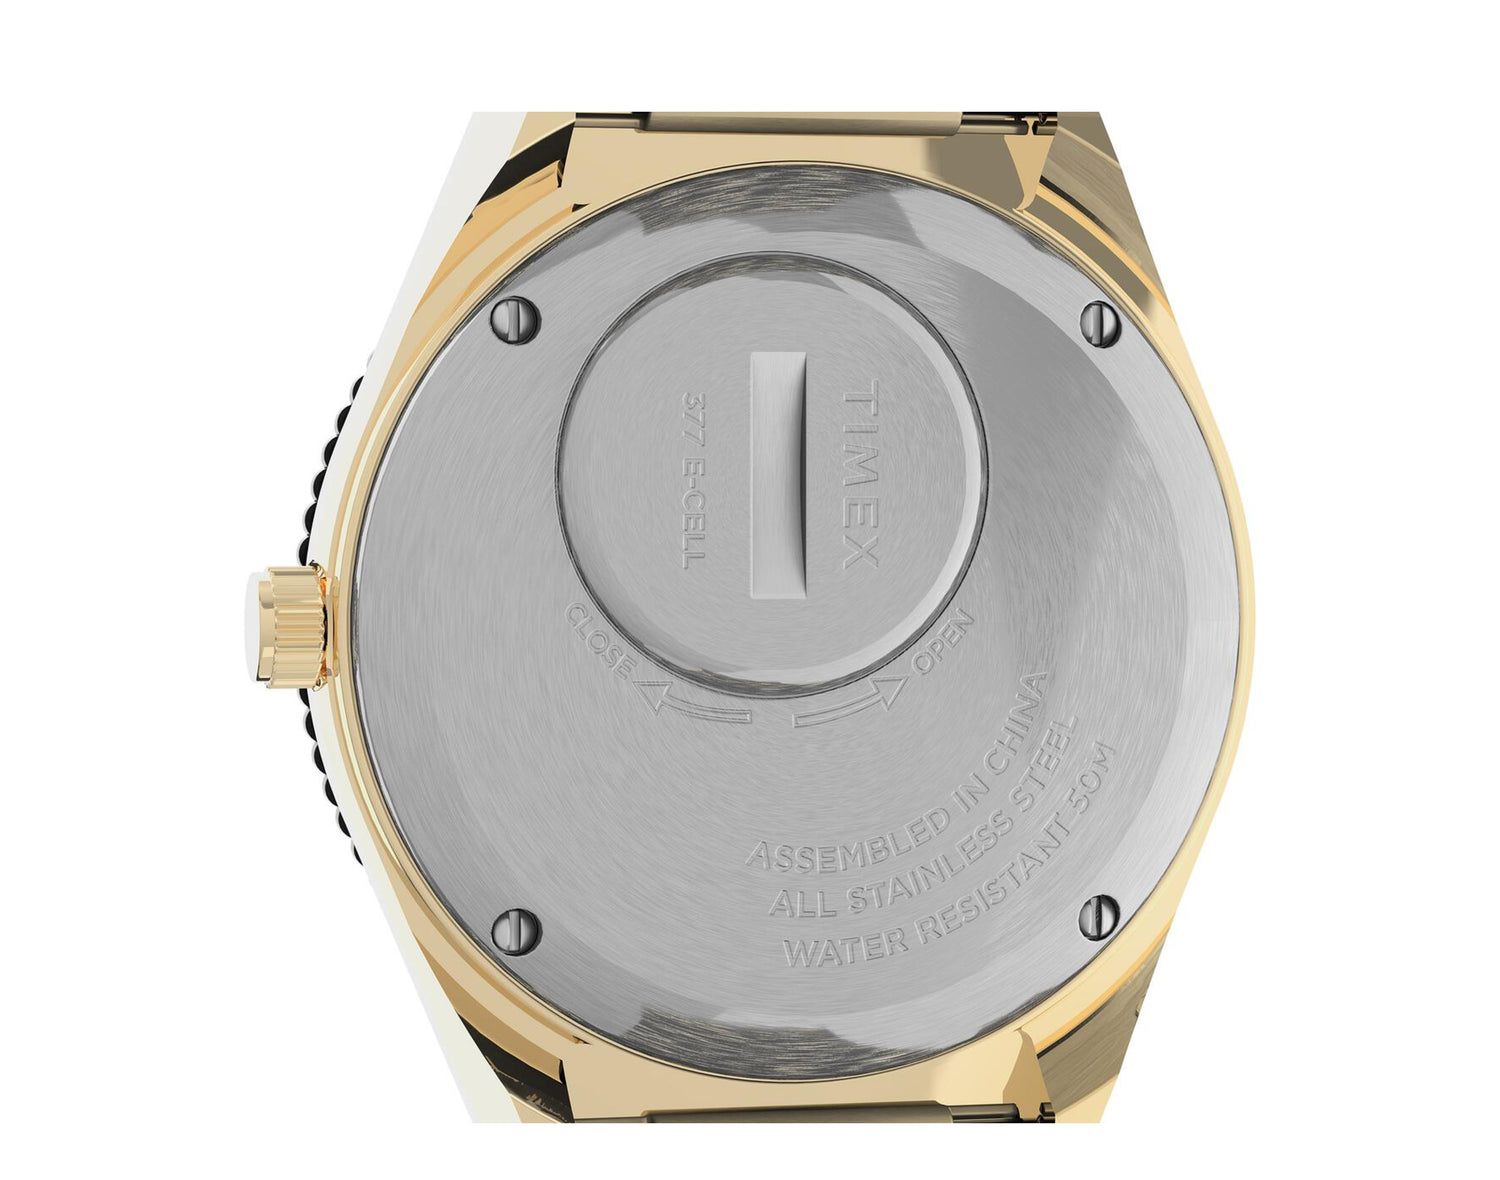 Timex Q 36mm Stainless Steel Bracelet Women's Watch